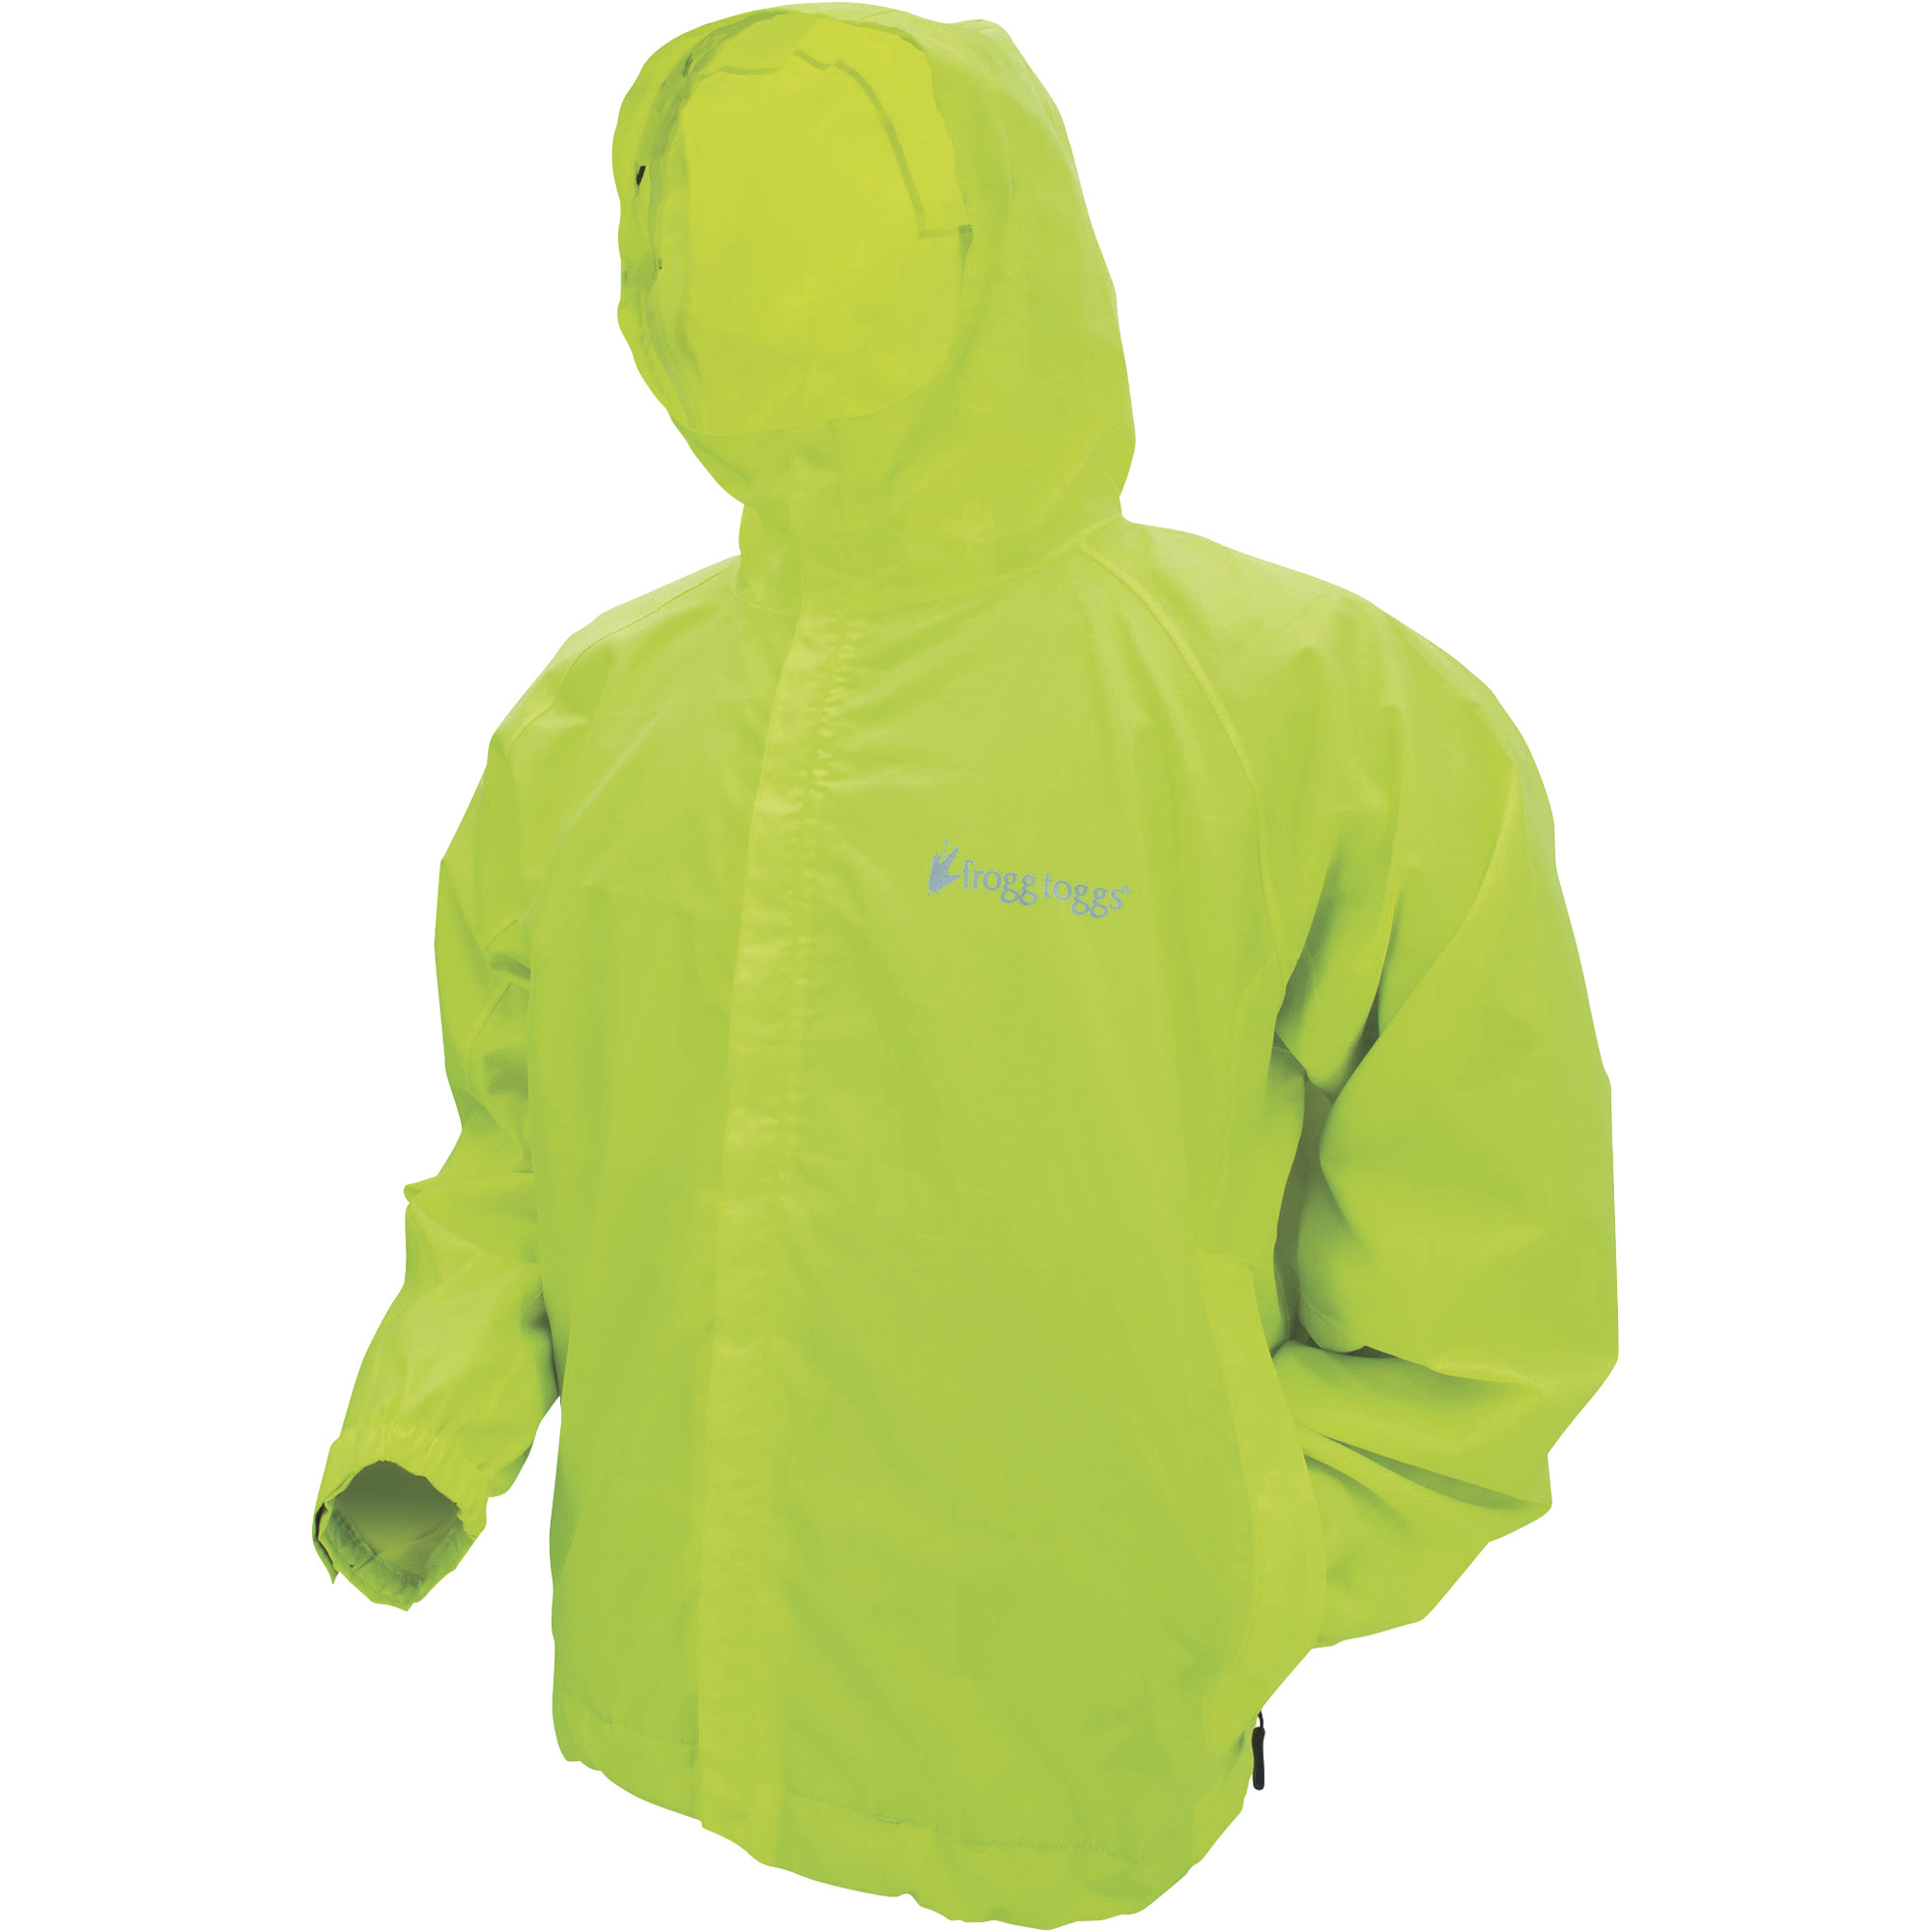 Frogg Toggs Men's Stormwatch Jacket â Lime, Large, Model SW62123-48LG